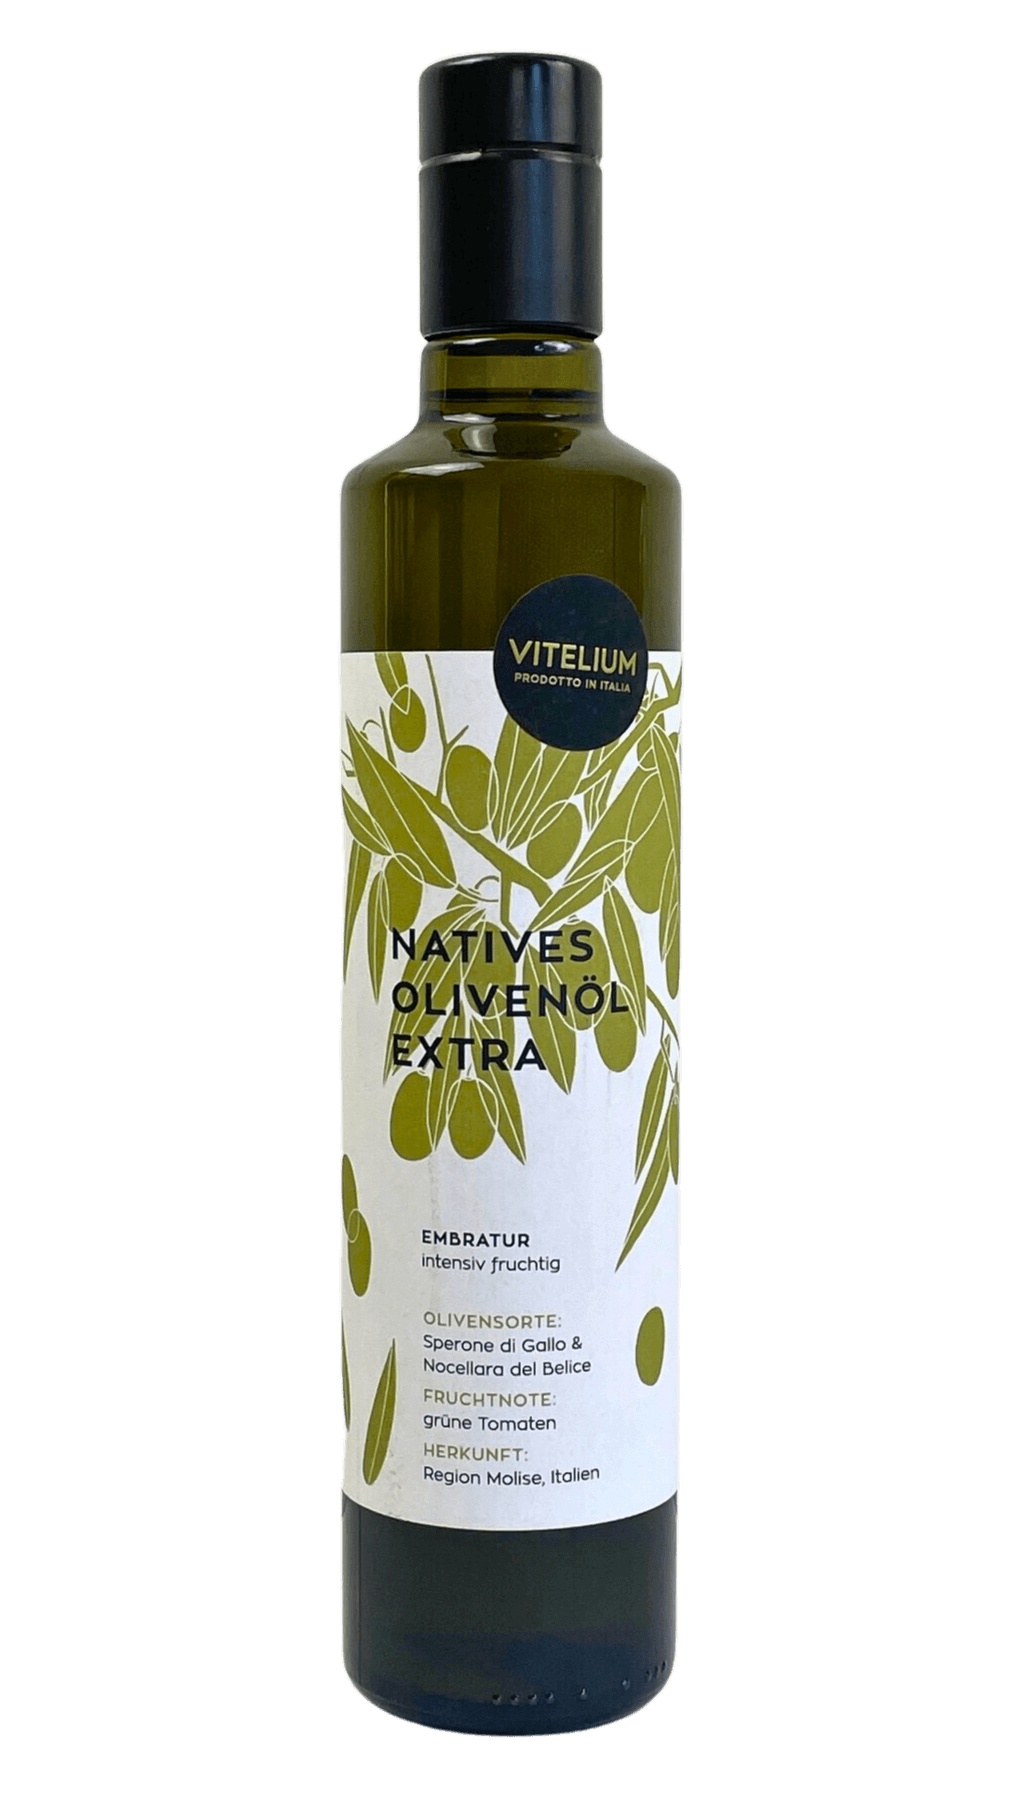 Natives Olivenöl Extra - EMBRATUR - intensiv fruchtig